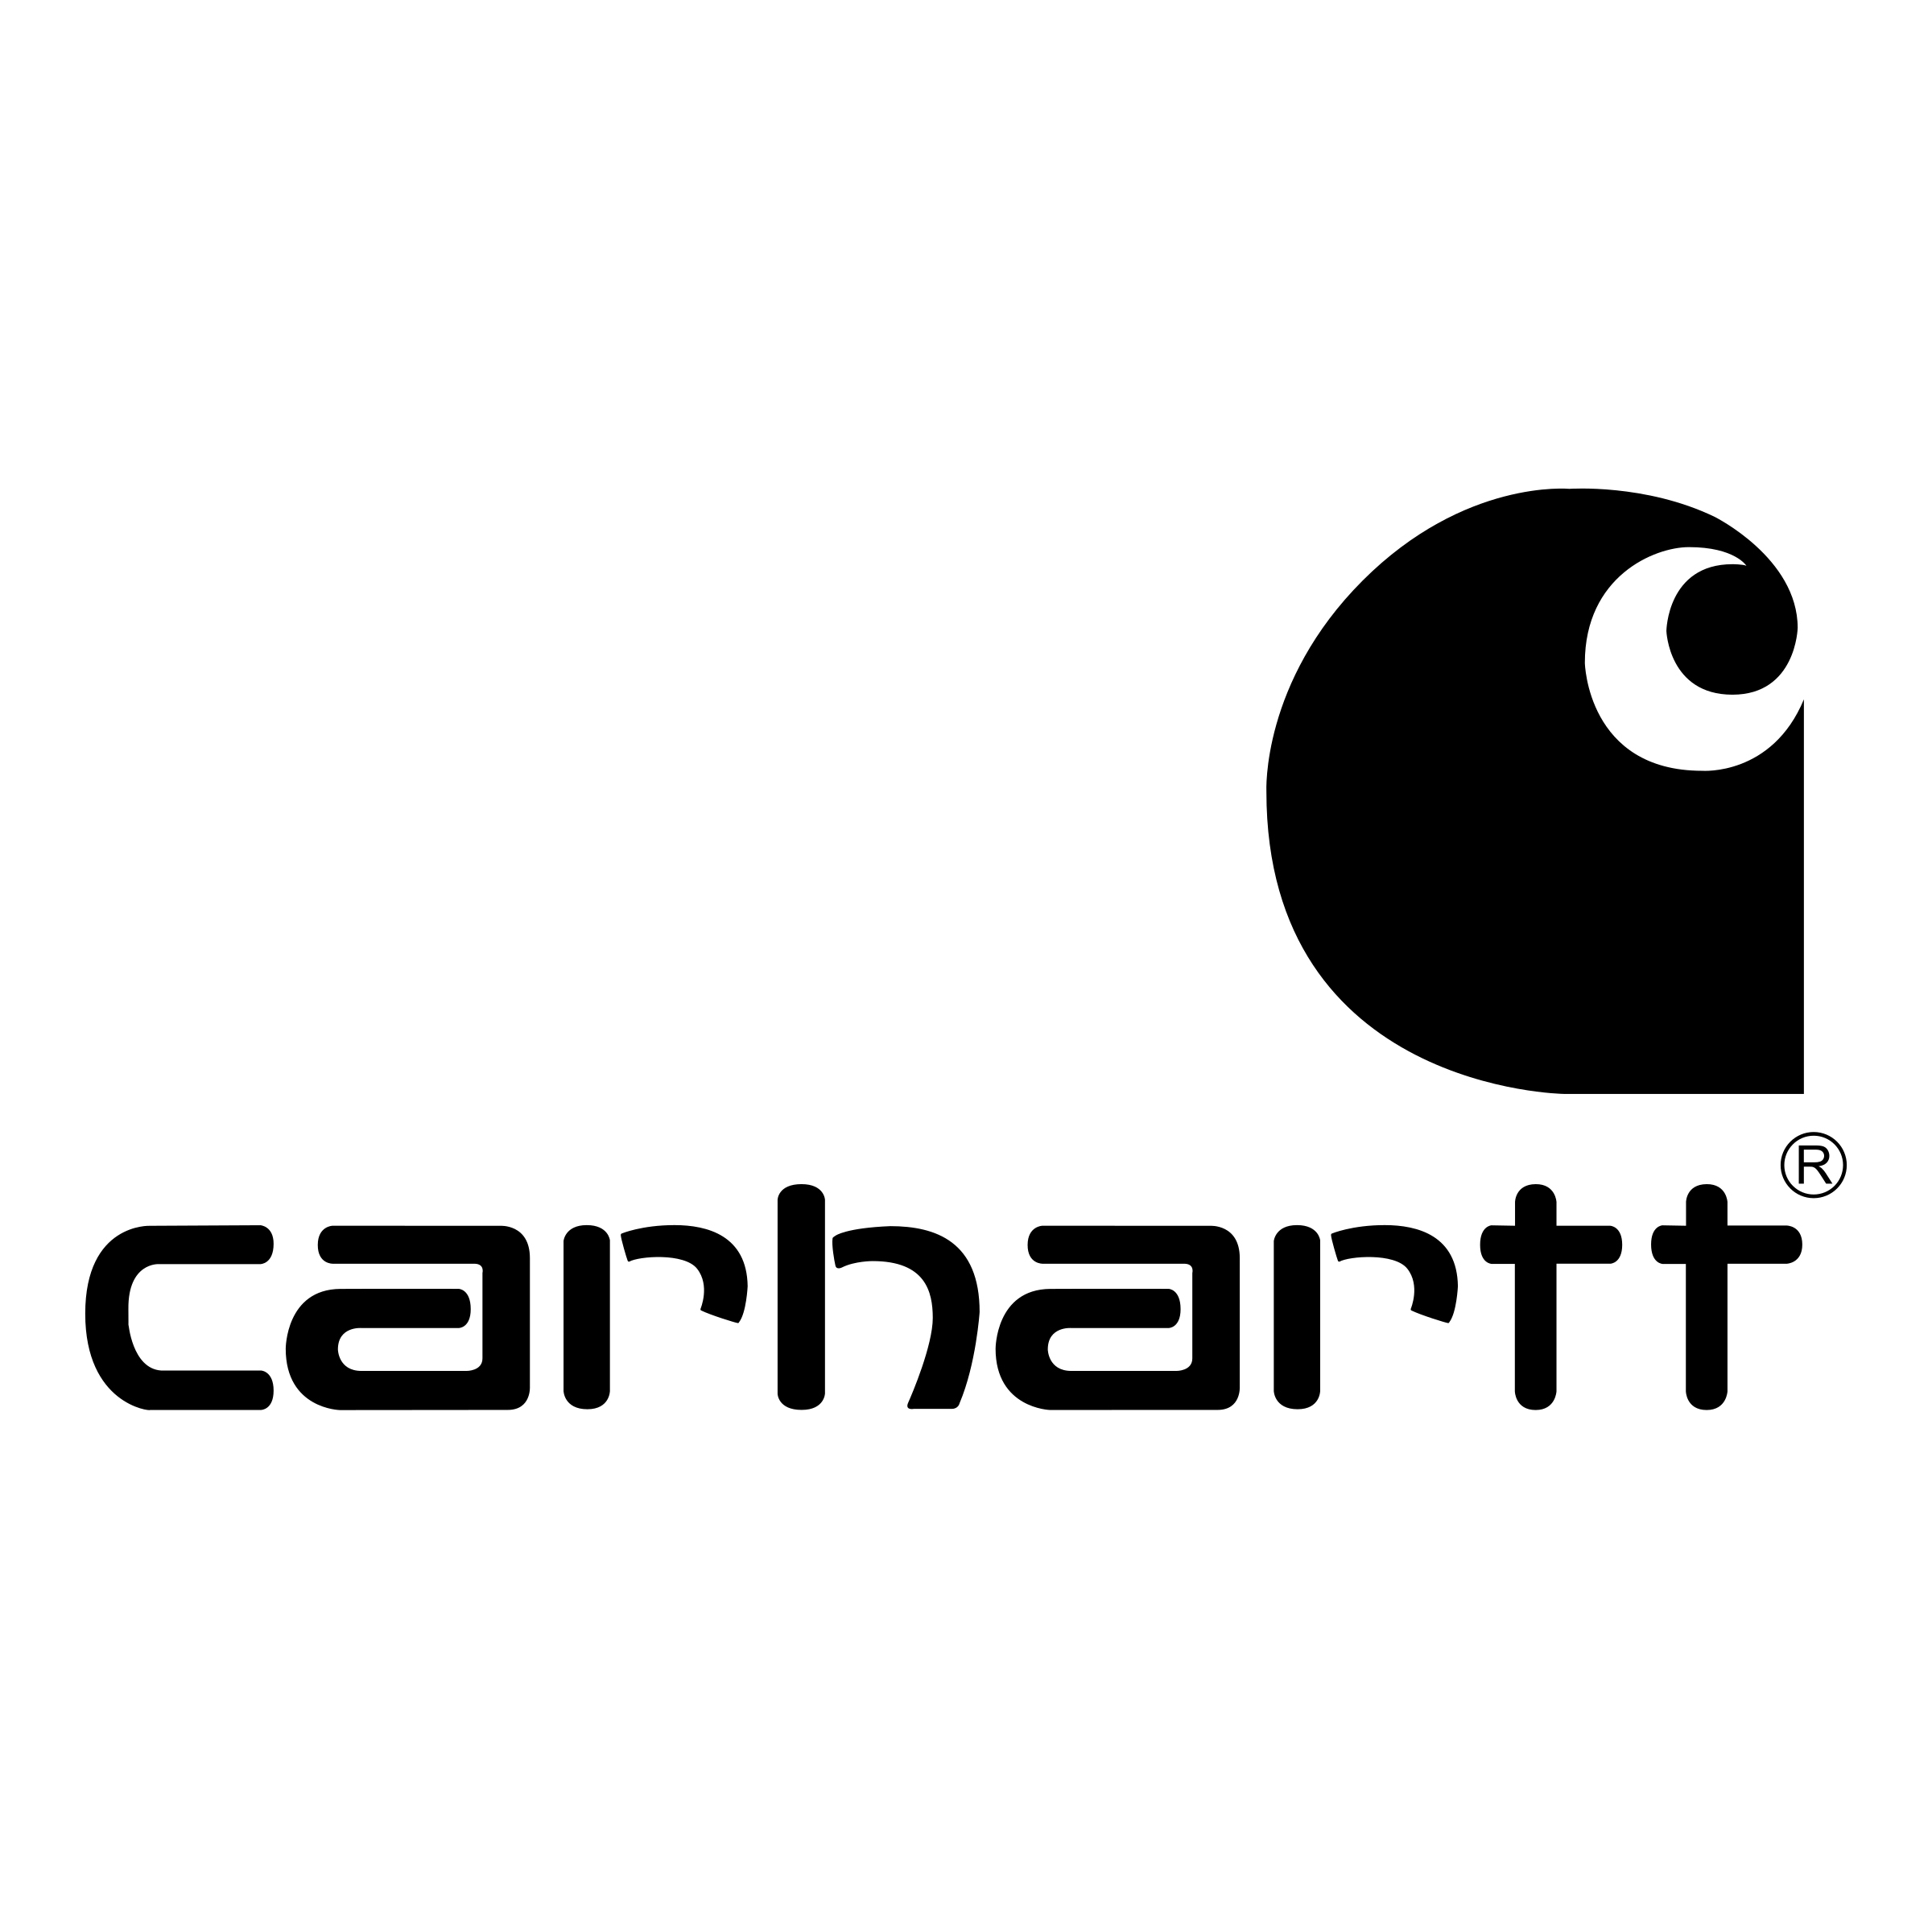 Carhartt Logo - Carhartt Logo PNG Transparent & SVG Vector - Freebie Supply